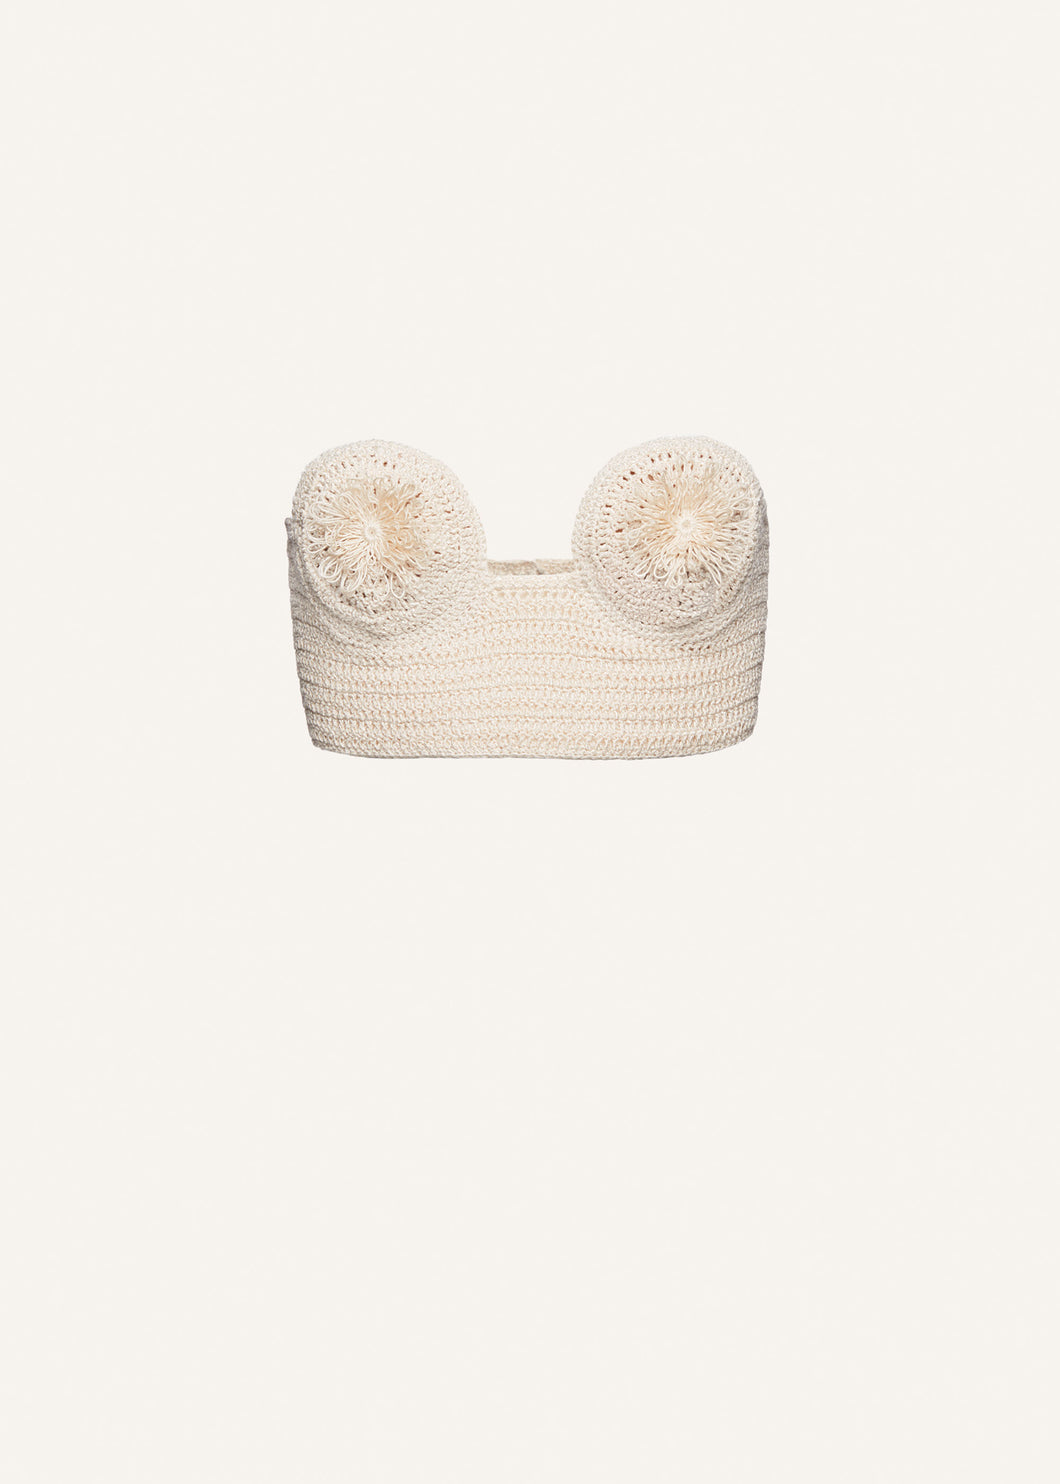 Strapless crochet flower applique bra in cream